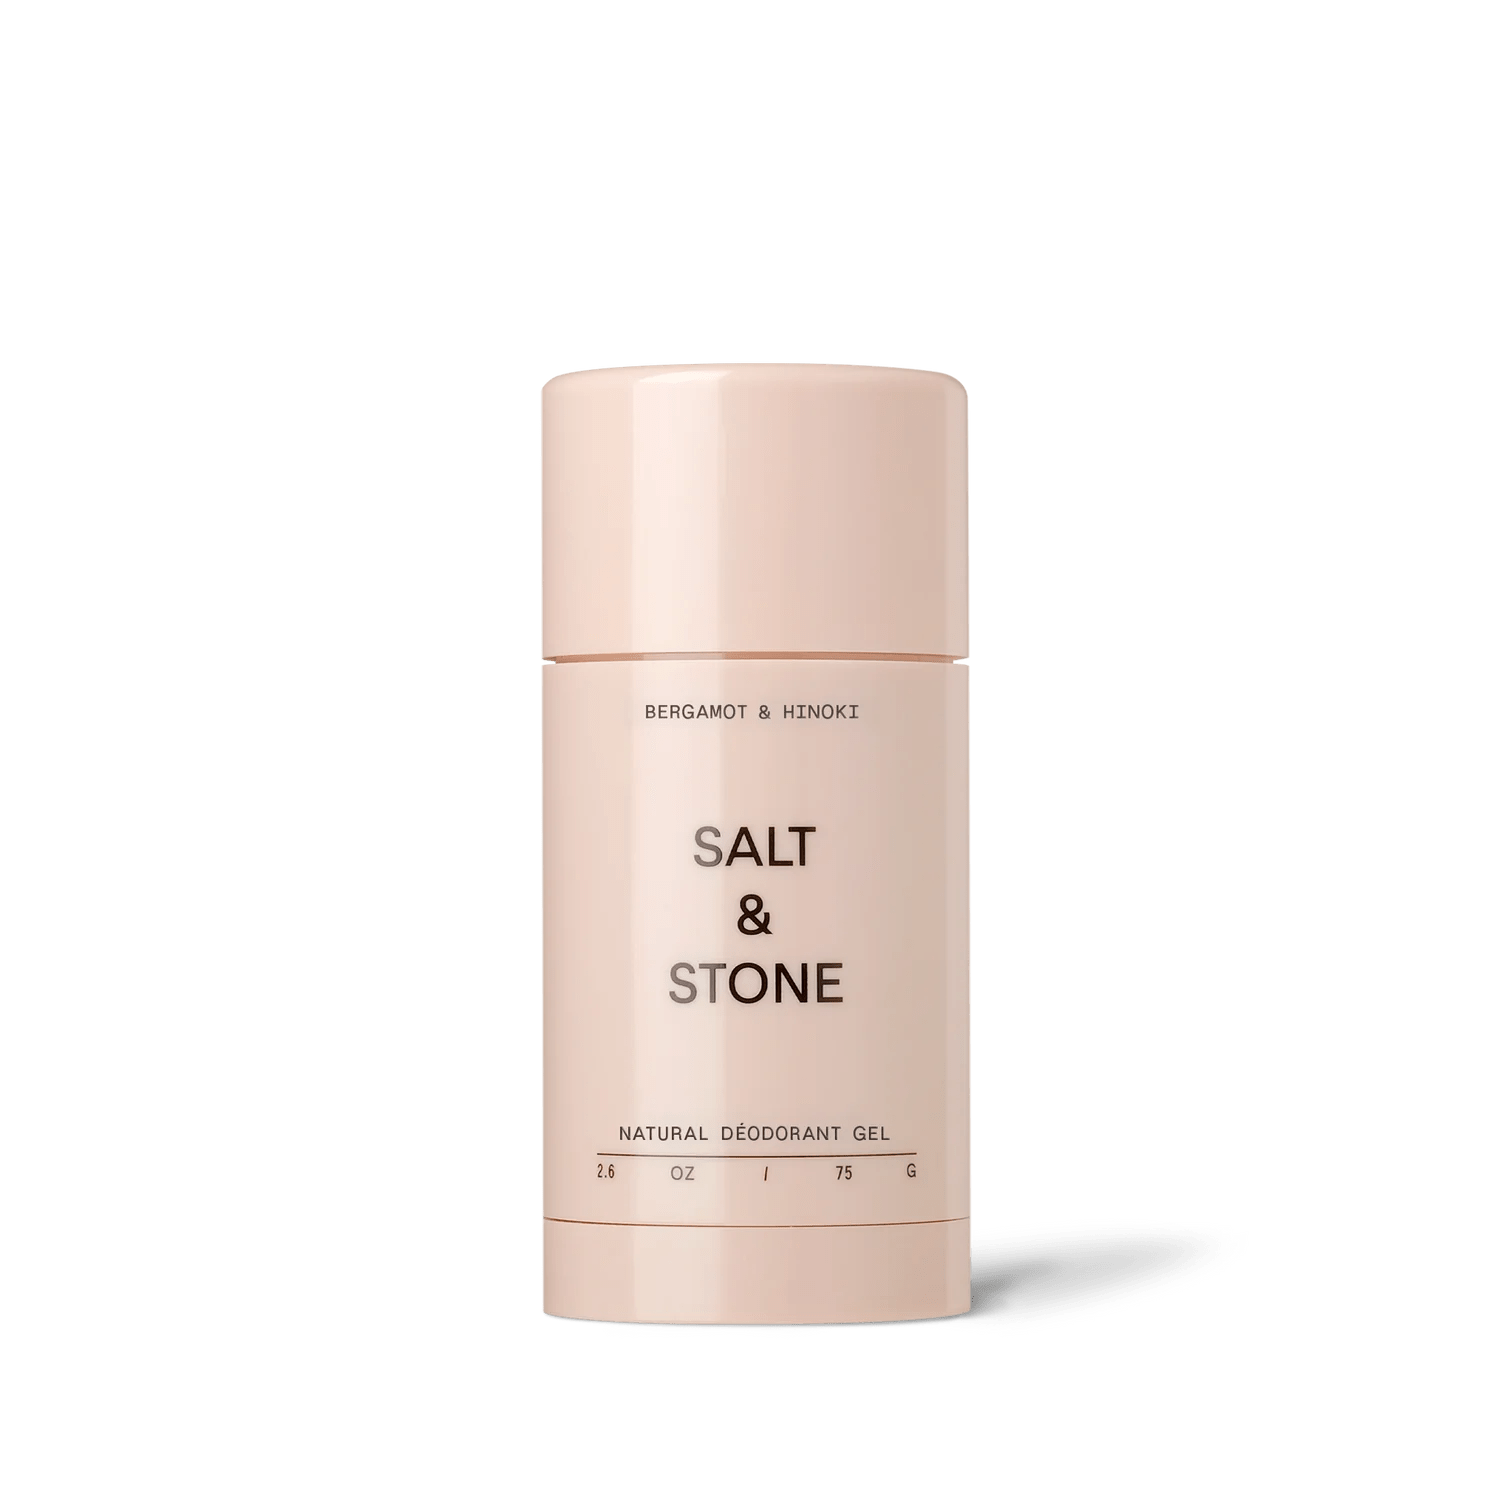 Salt & Stone Deodorant Natural Deodorant Gel - Bergamot & Hinoki sunja link - canada